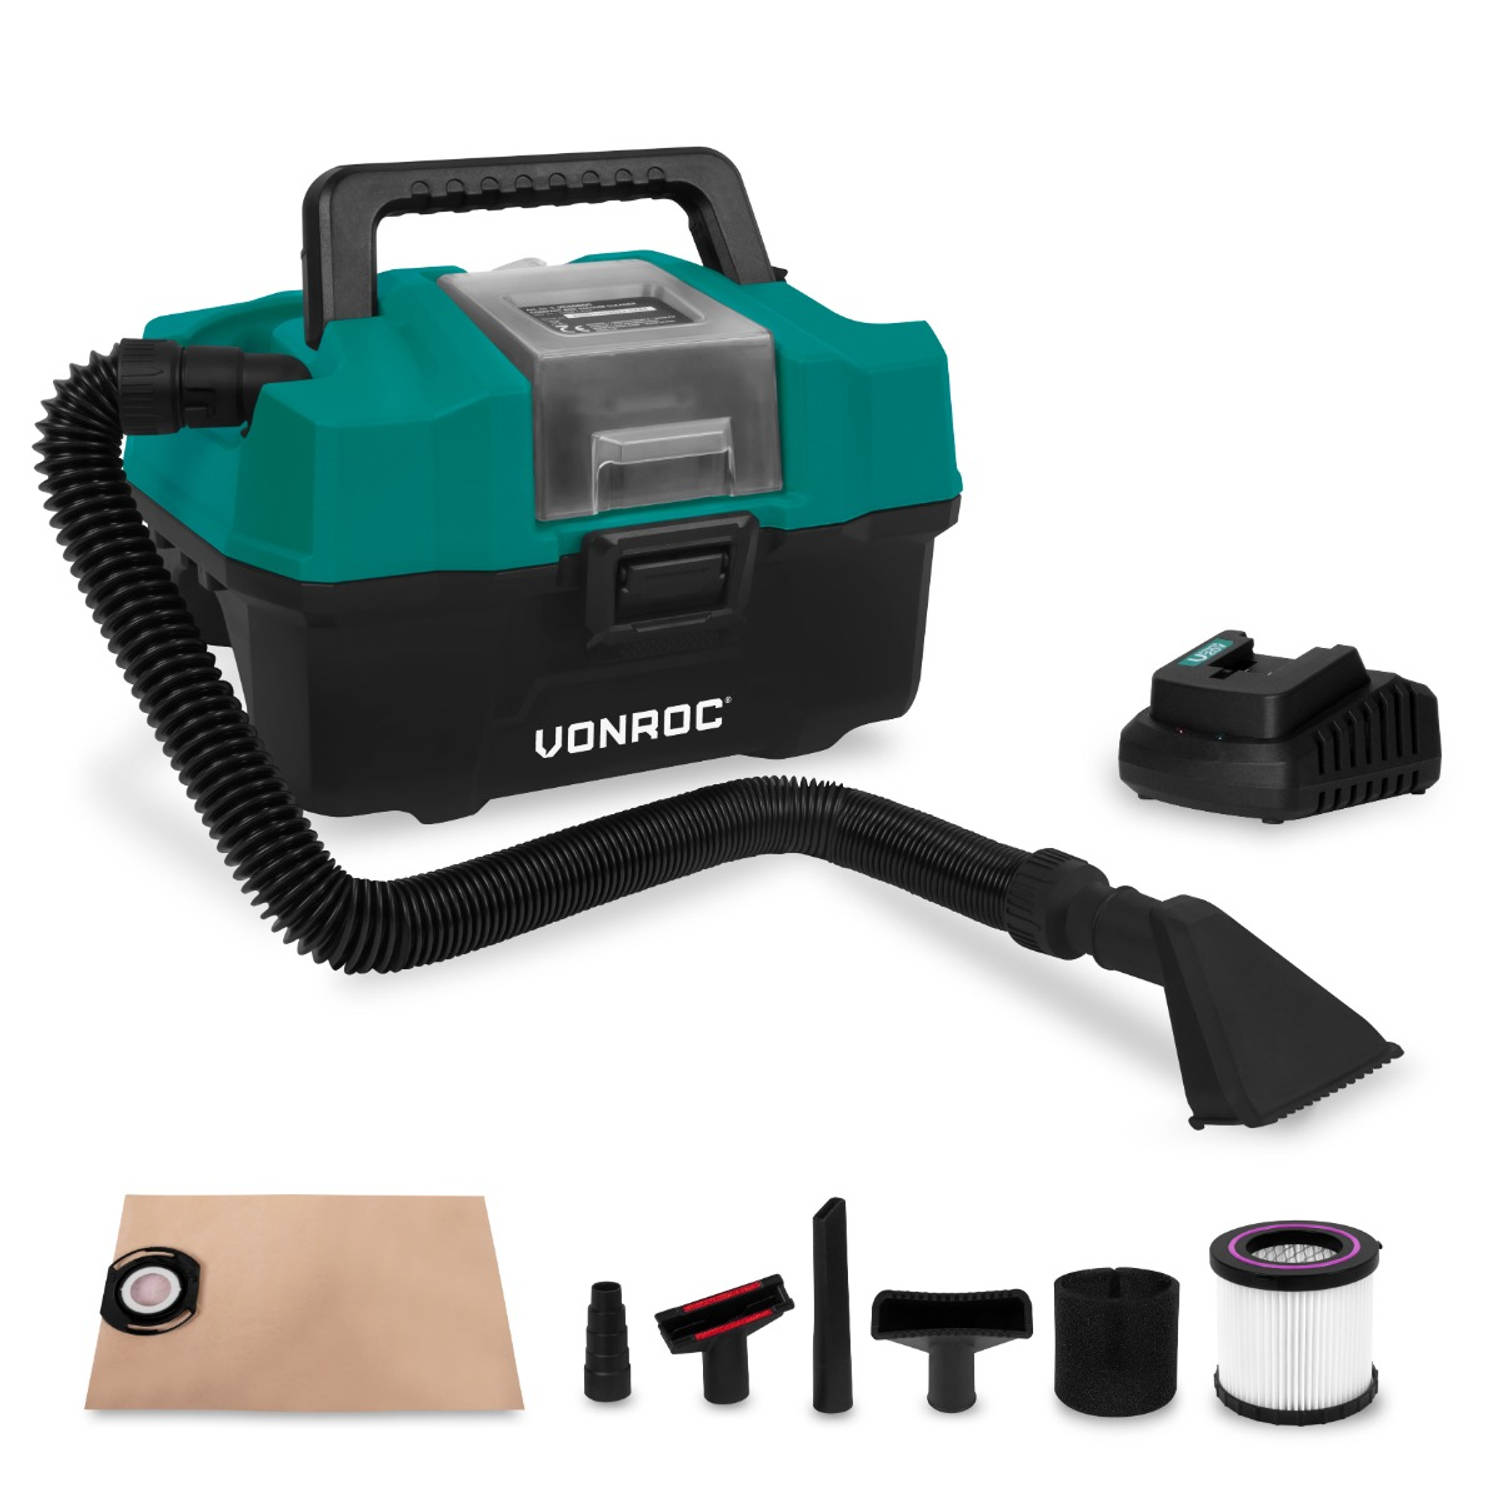 VONROC Compacte alleszuiger / stofzuiger - 20V - Incl. Diverse accessoires, 2.0Ah accu en snellader